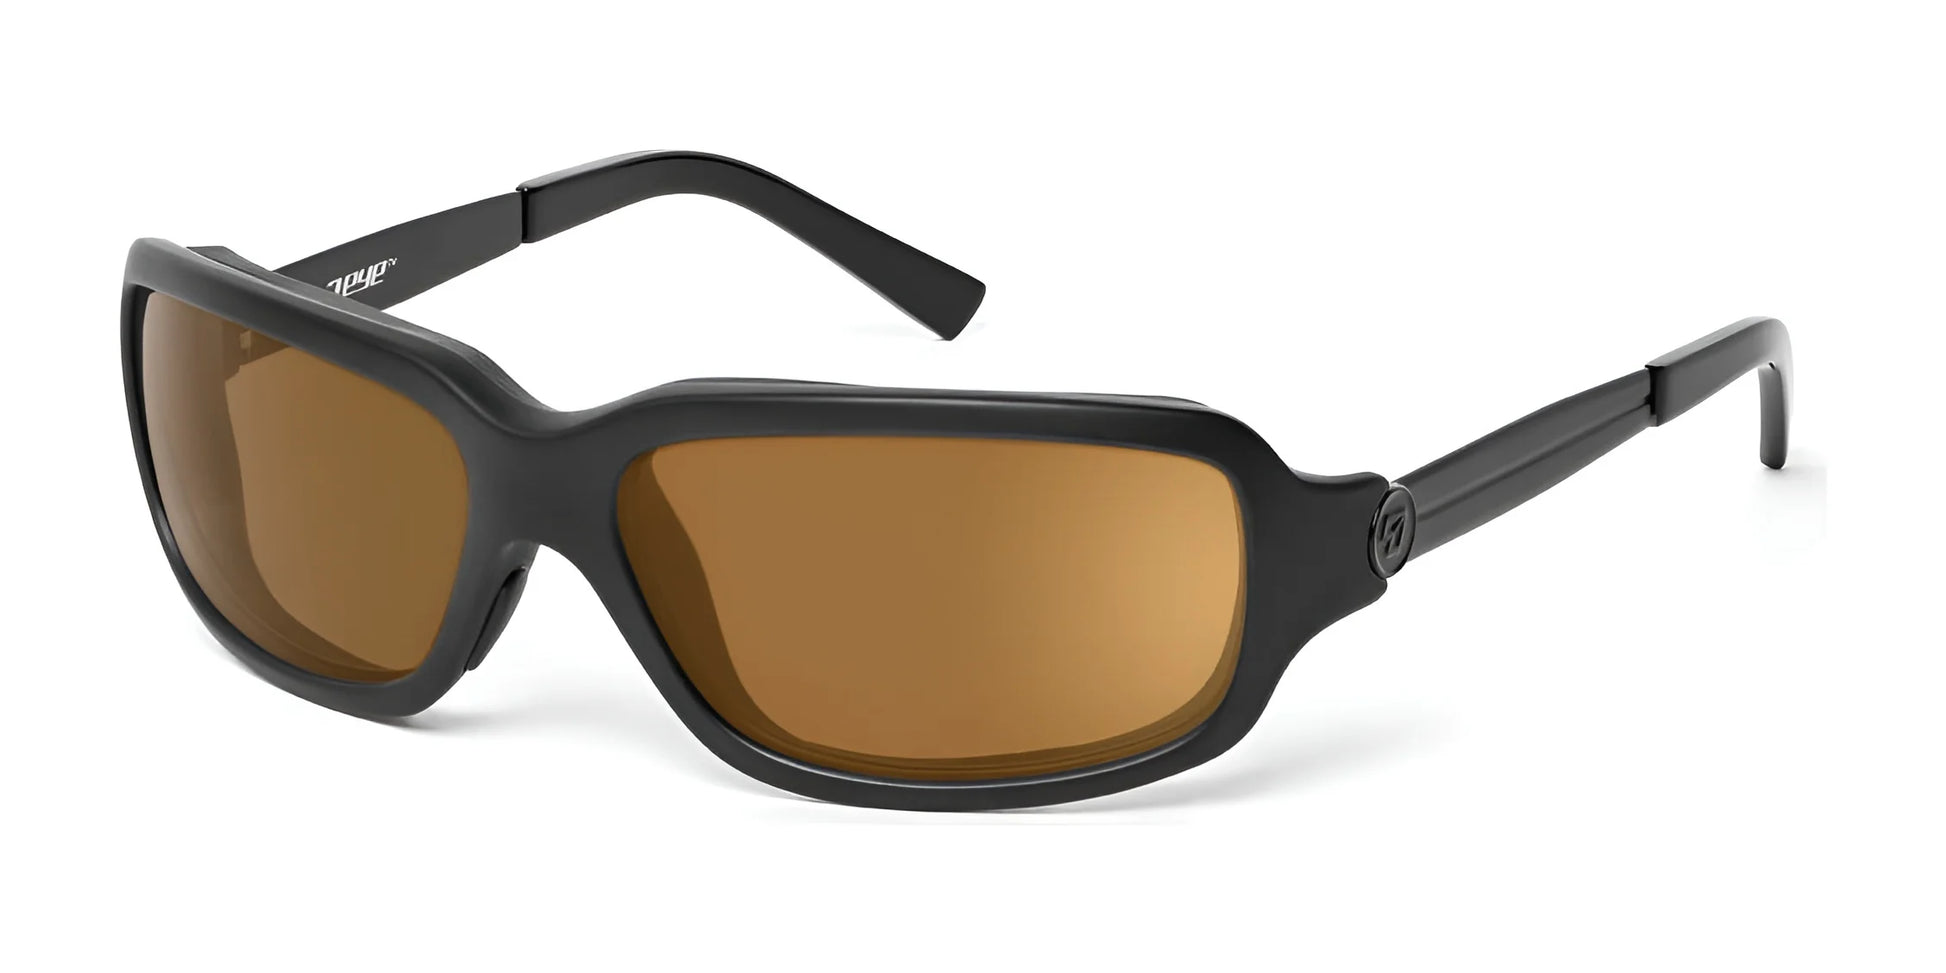 7eye Tahoe Sunglasses Matte Black / Copper